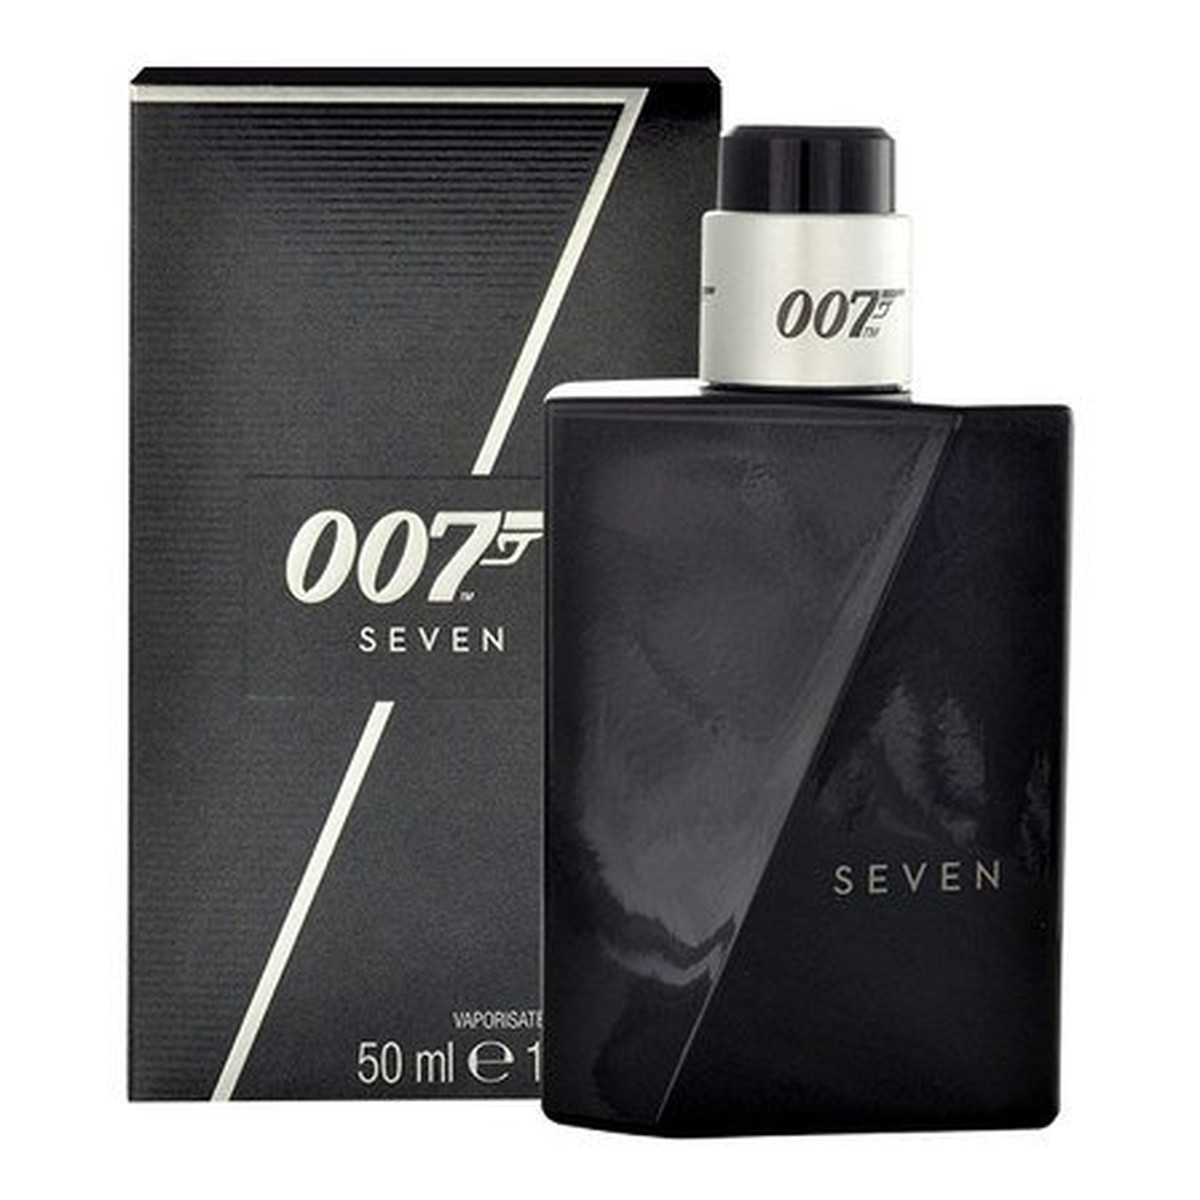 James Bond 007 Seven woda toaletowa 50ml